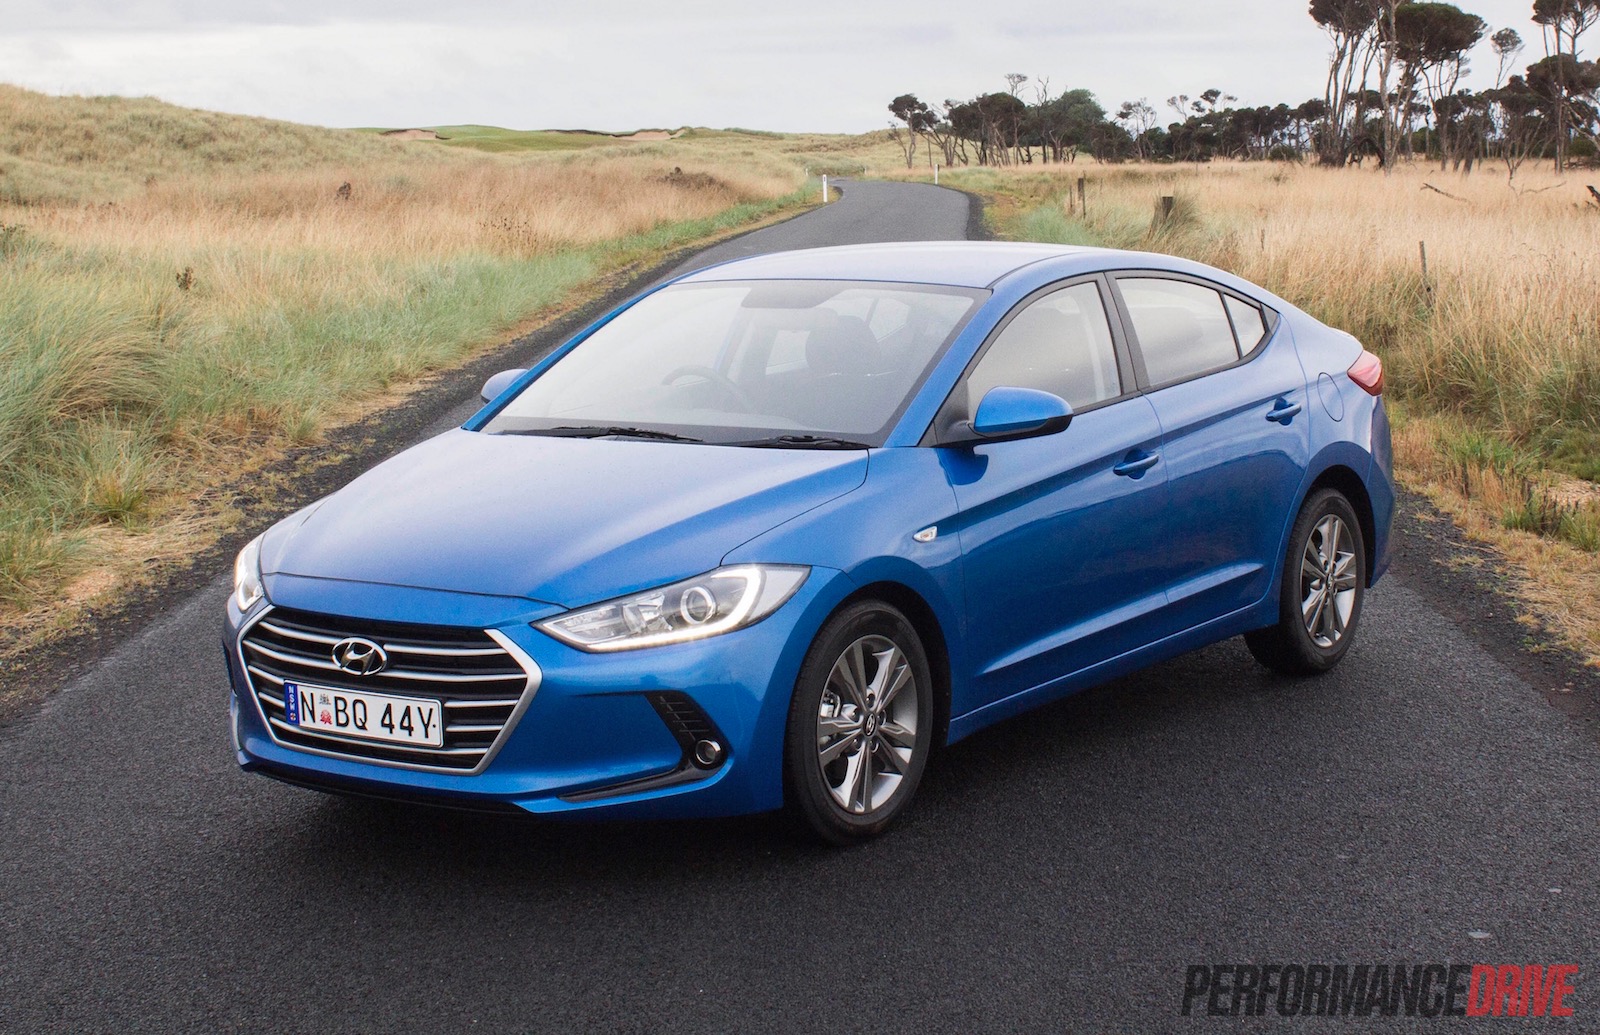 2016 Hyundai Elantra review - Australian launch - PerformanceDrive